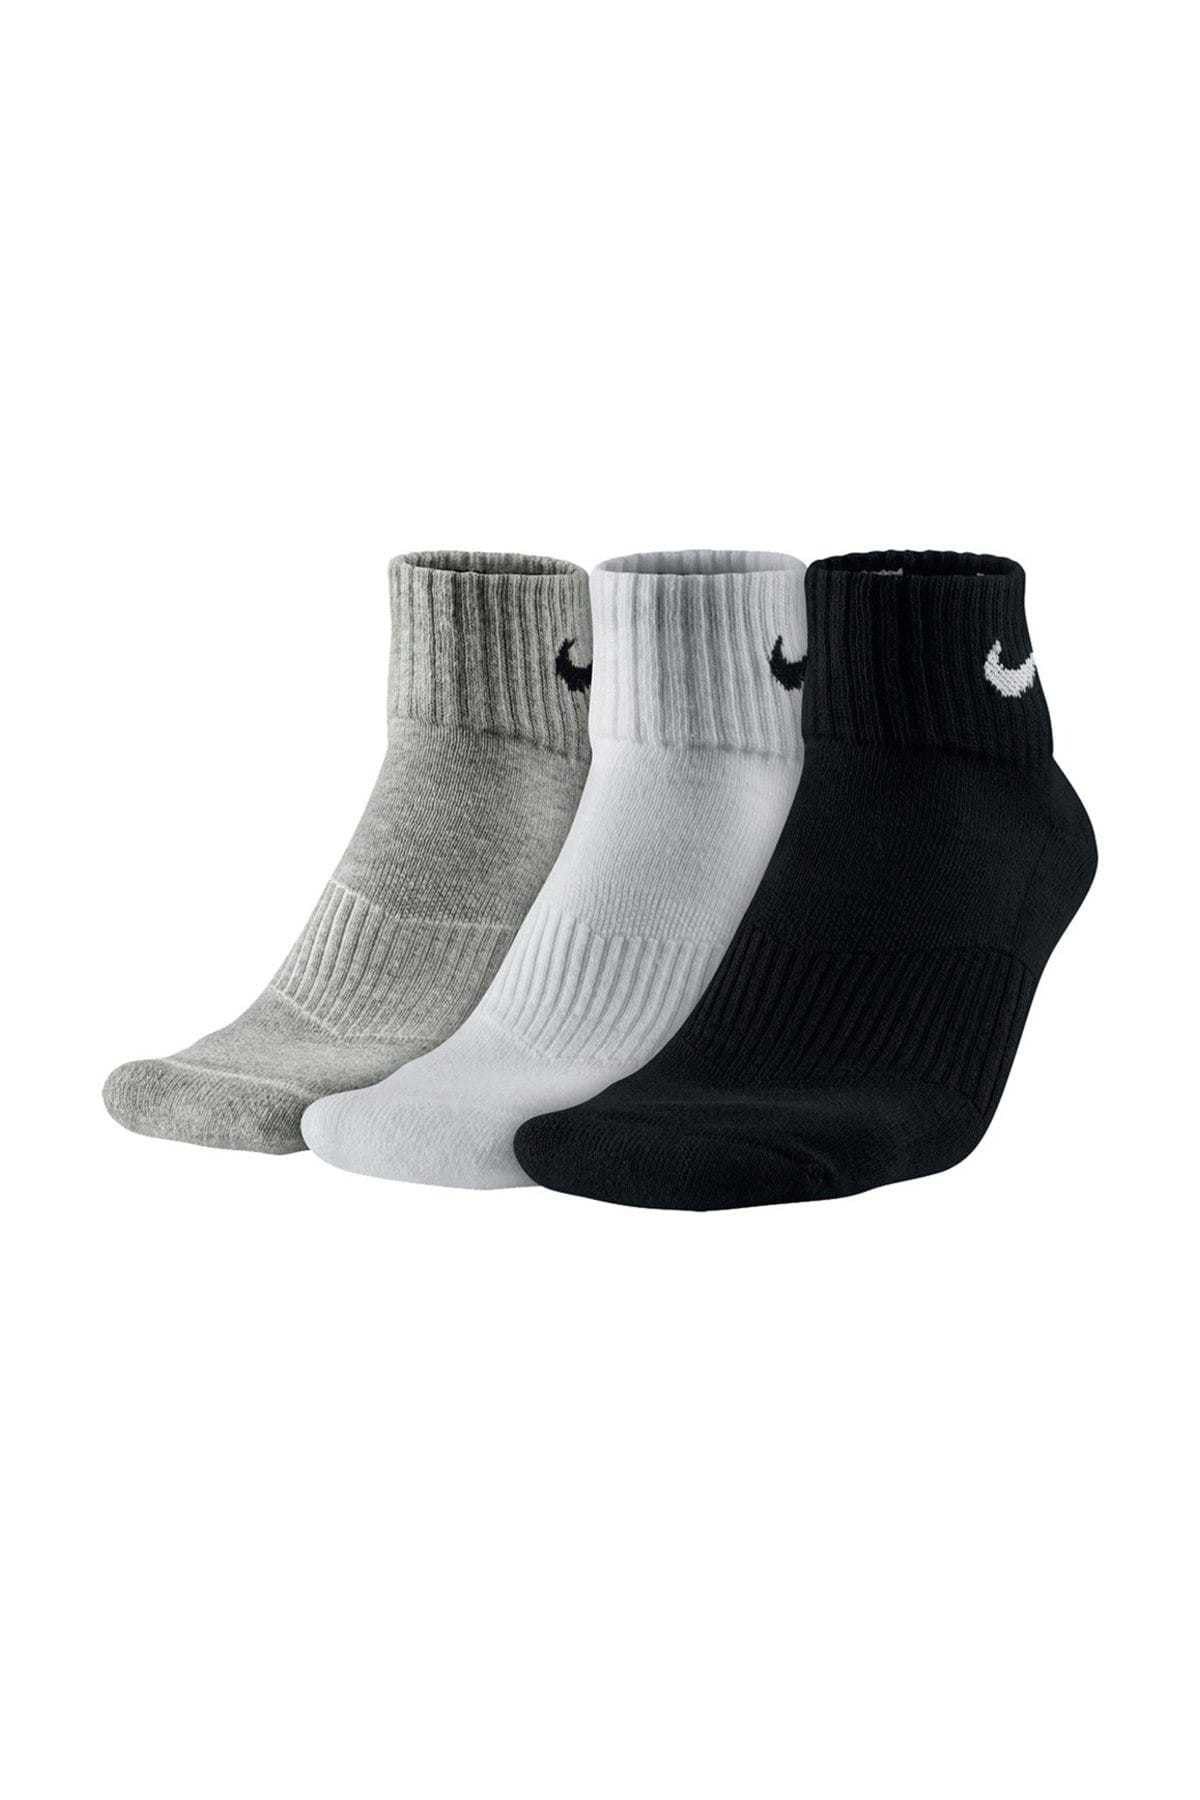 Nike Unk Perf Cush Qt  3'lü Kısa Çorap (SX4703-901)